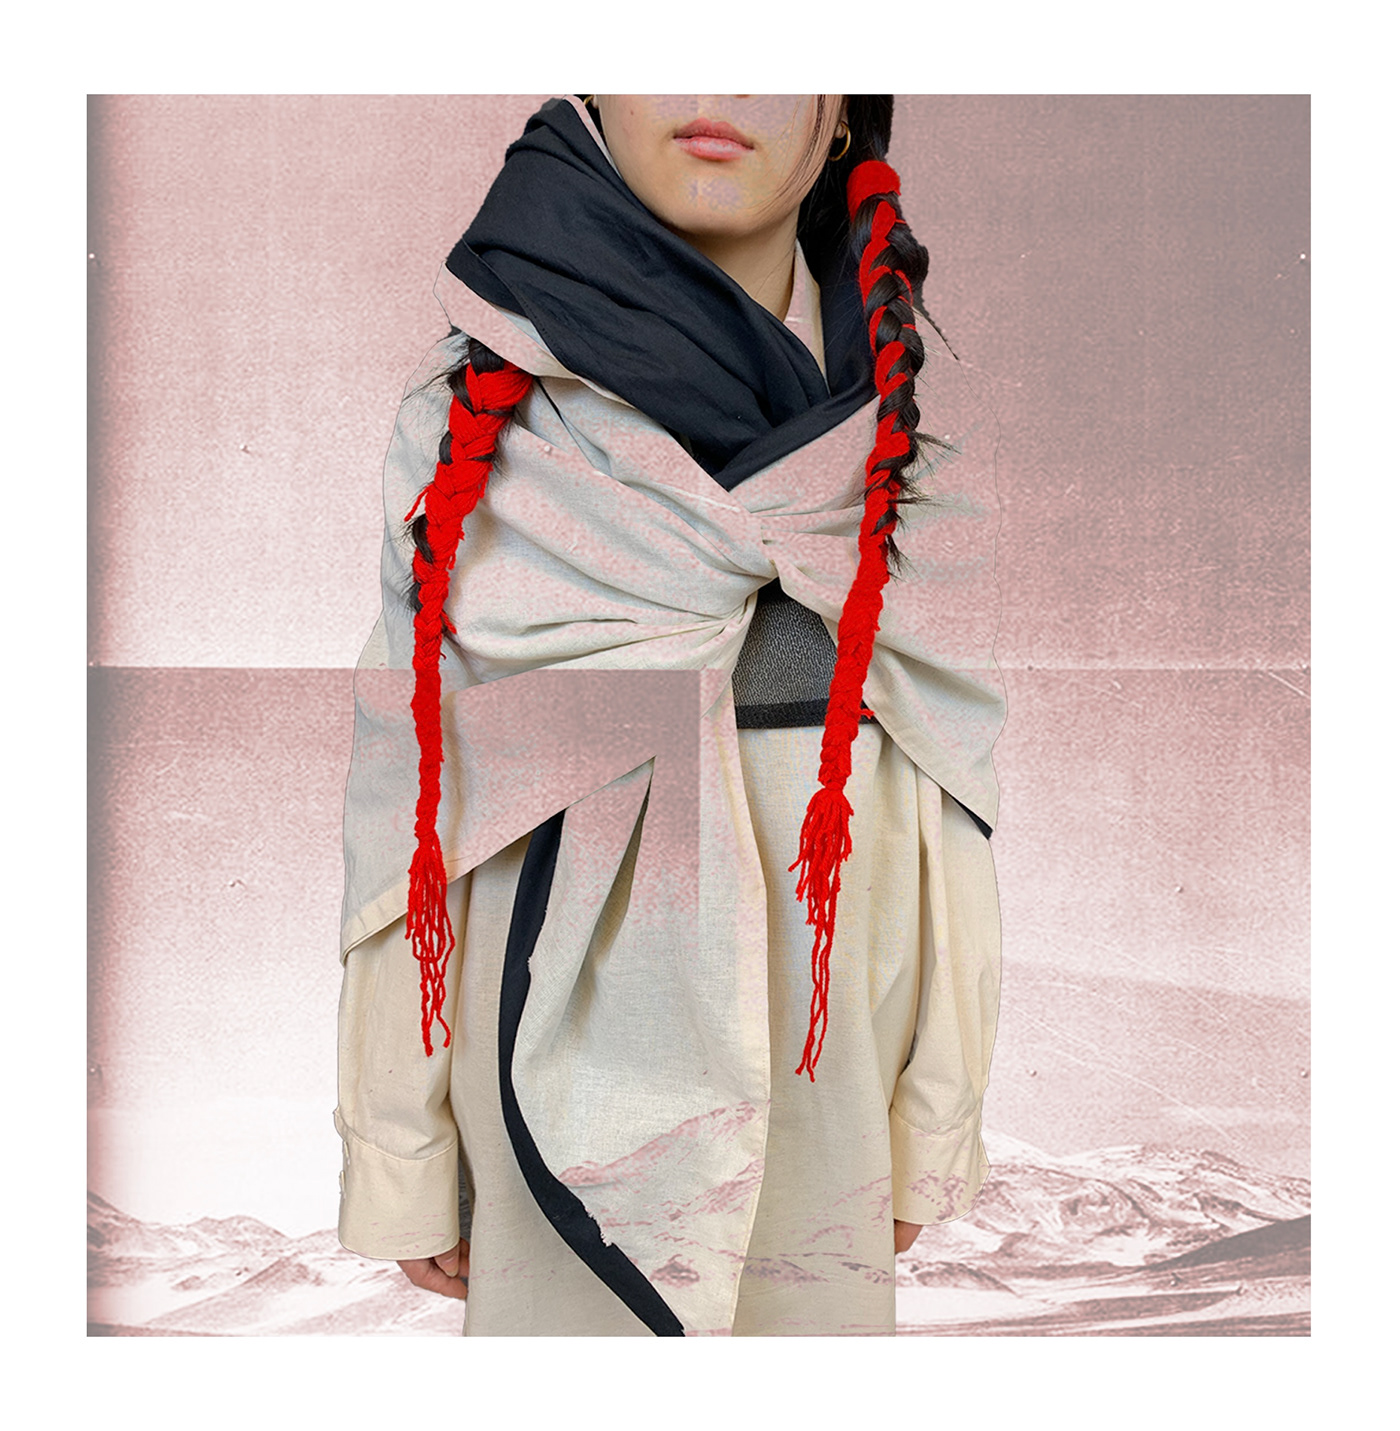 Clothing editorial fashion design shirt scarf